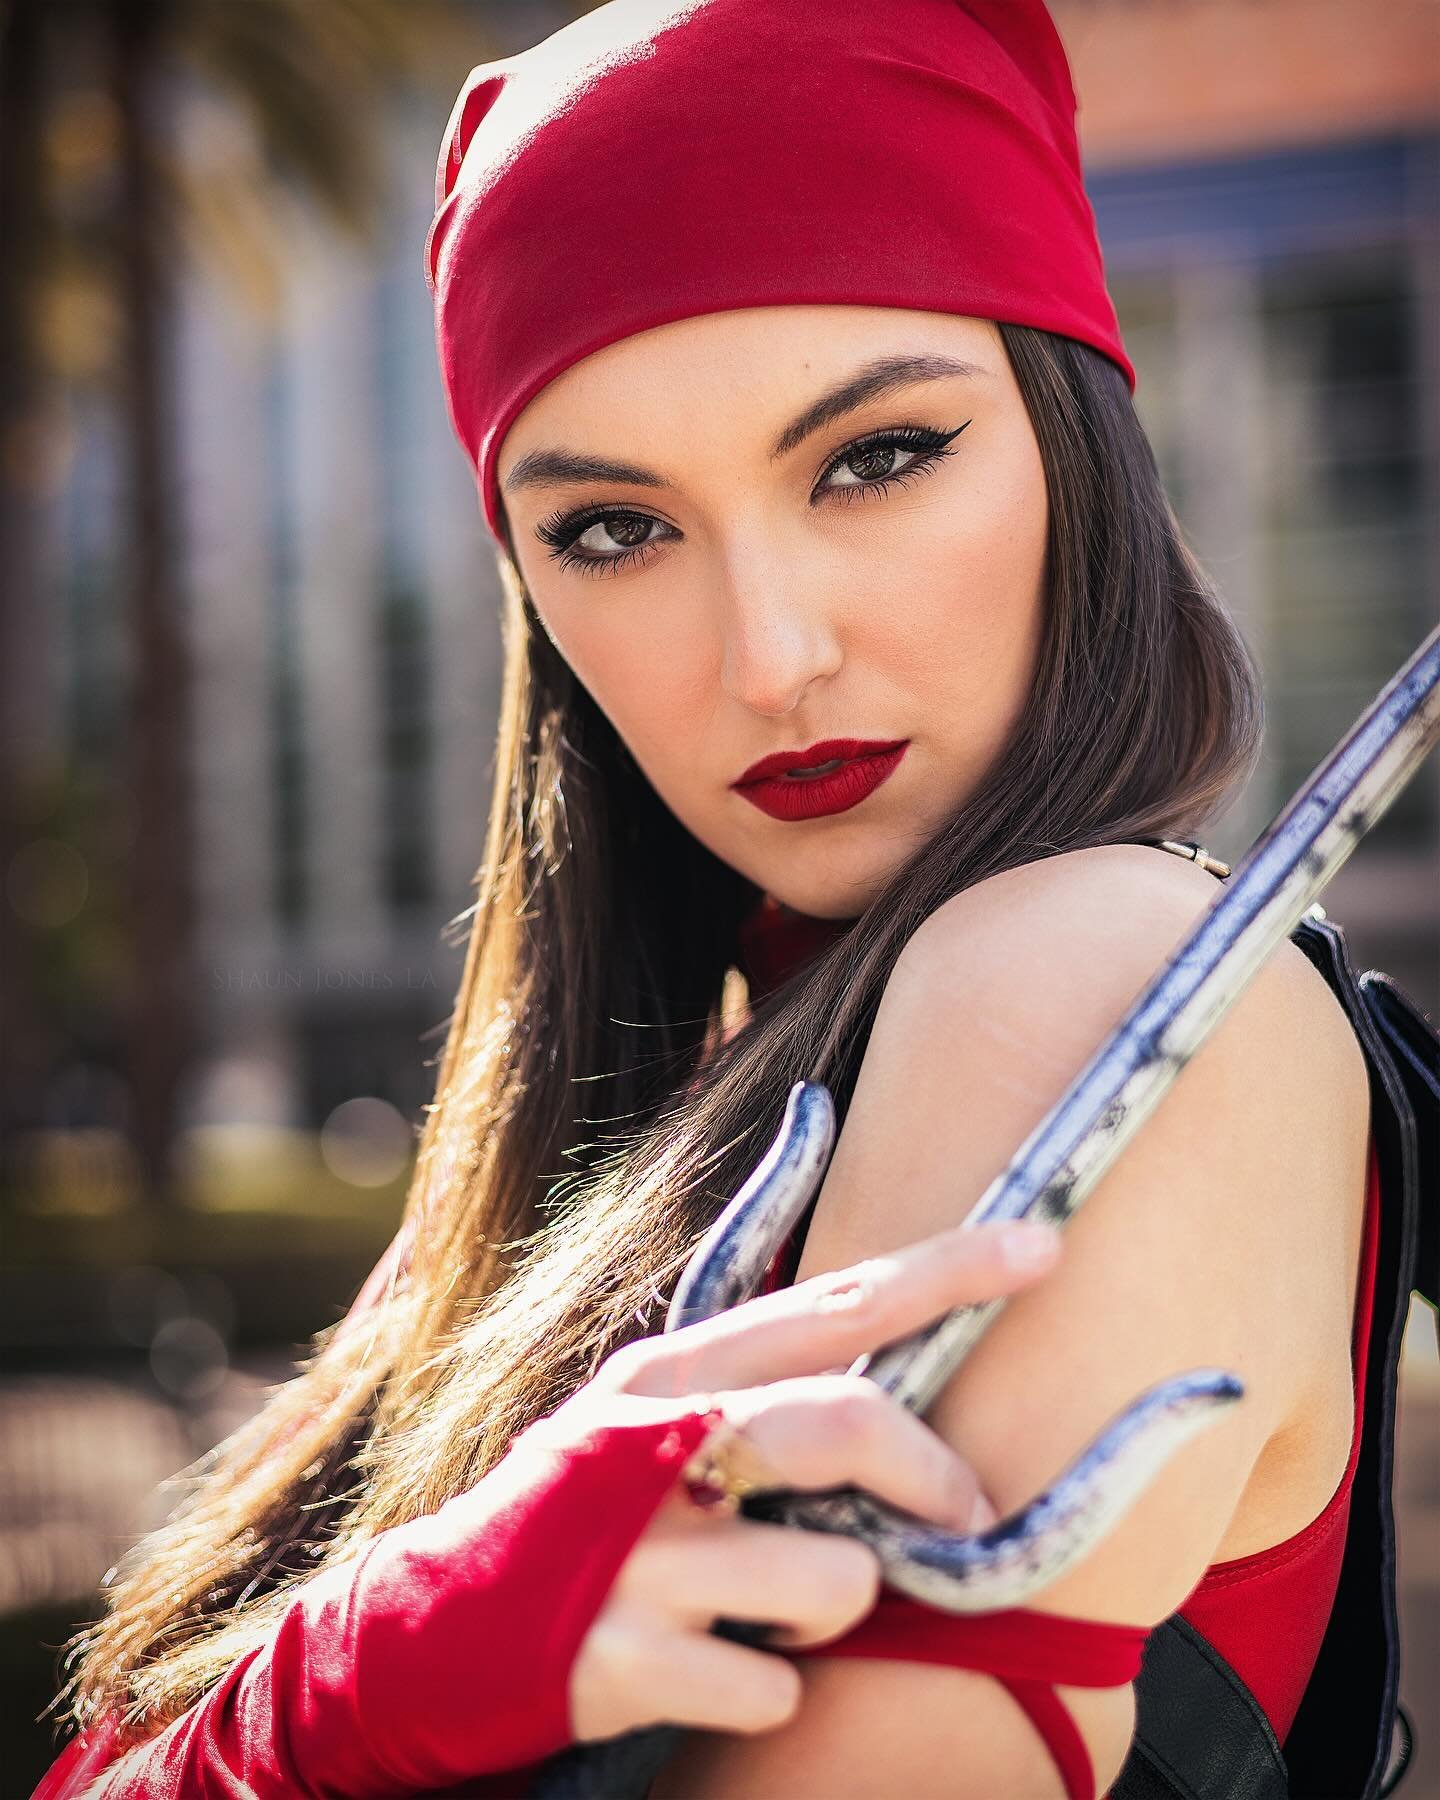 &ldquo;I am Elektra, the assassin.
To look upon me... is to see the end of life.&rdquo;
#WonderCon #Elektra #Marvel
Cosplay: @beautyandbrainswithatwist 
Photographer: @shaunjonesla 
Event: @wondercon